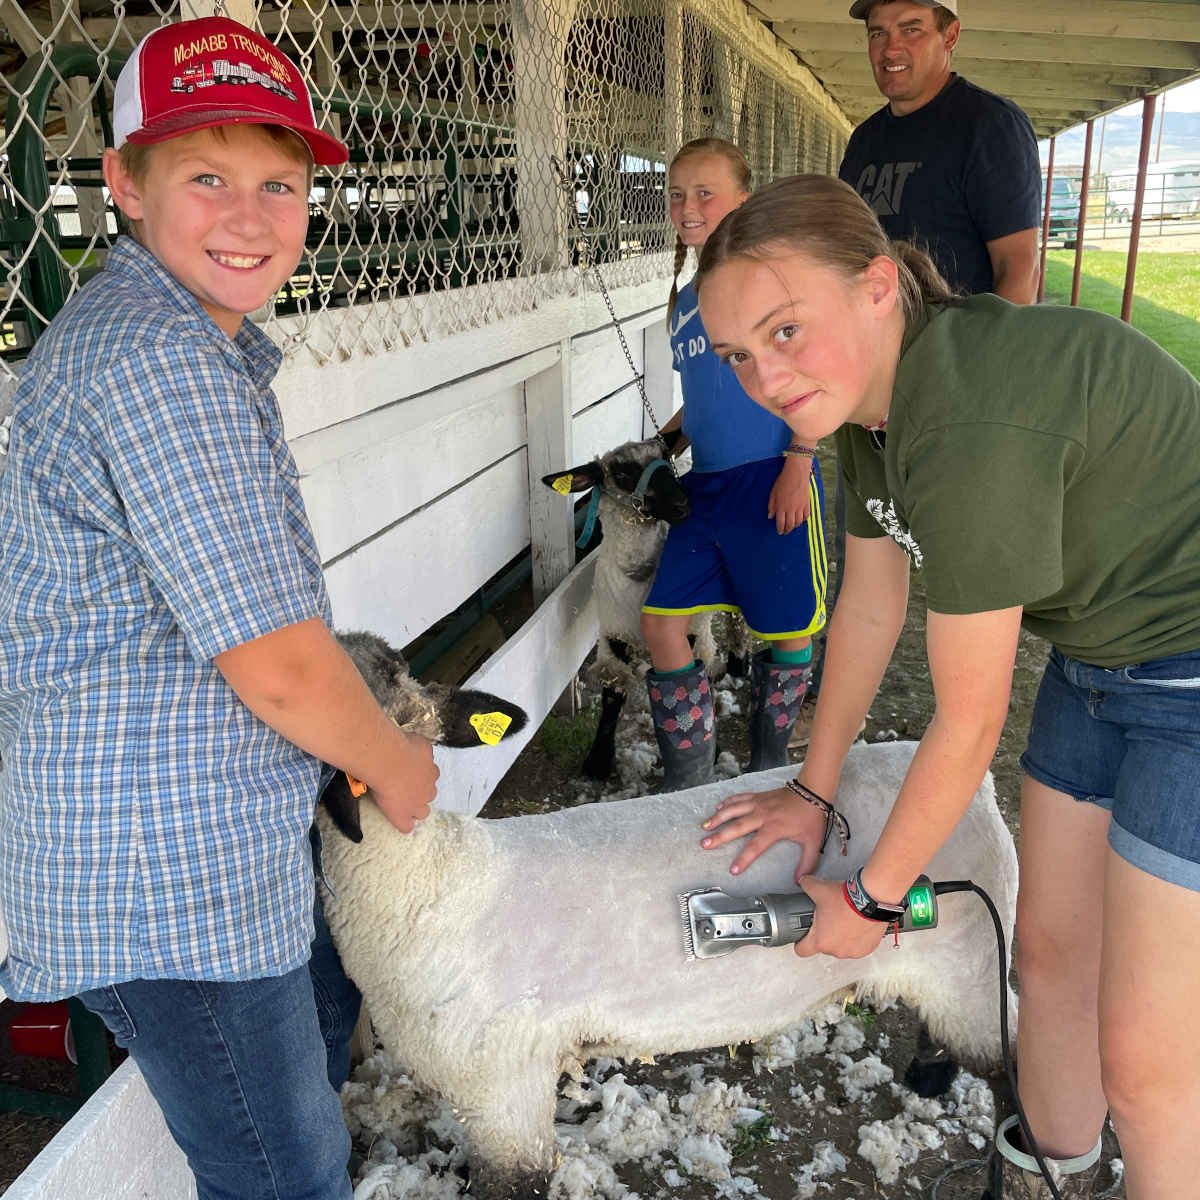 A group of youth shearing sheep.